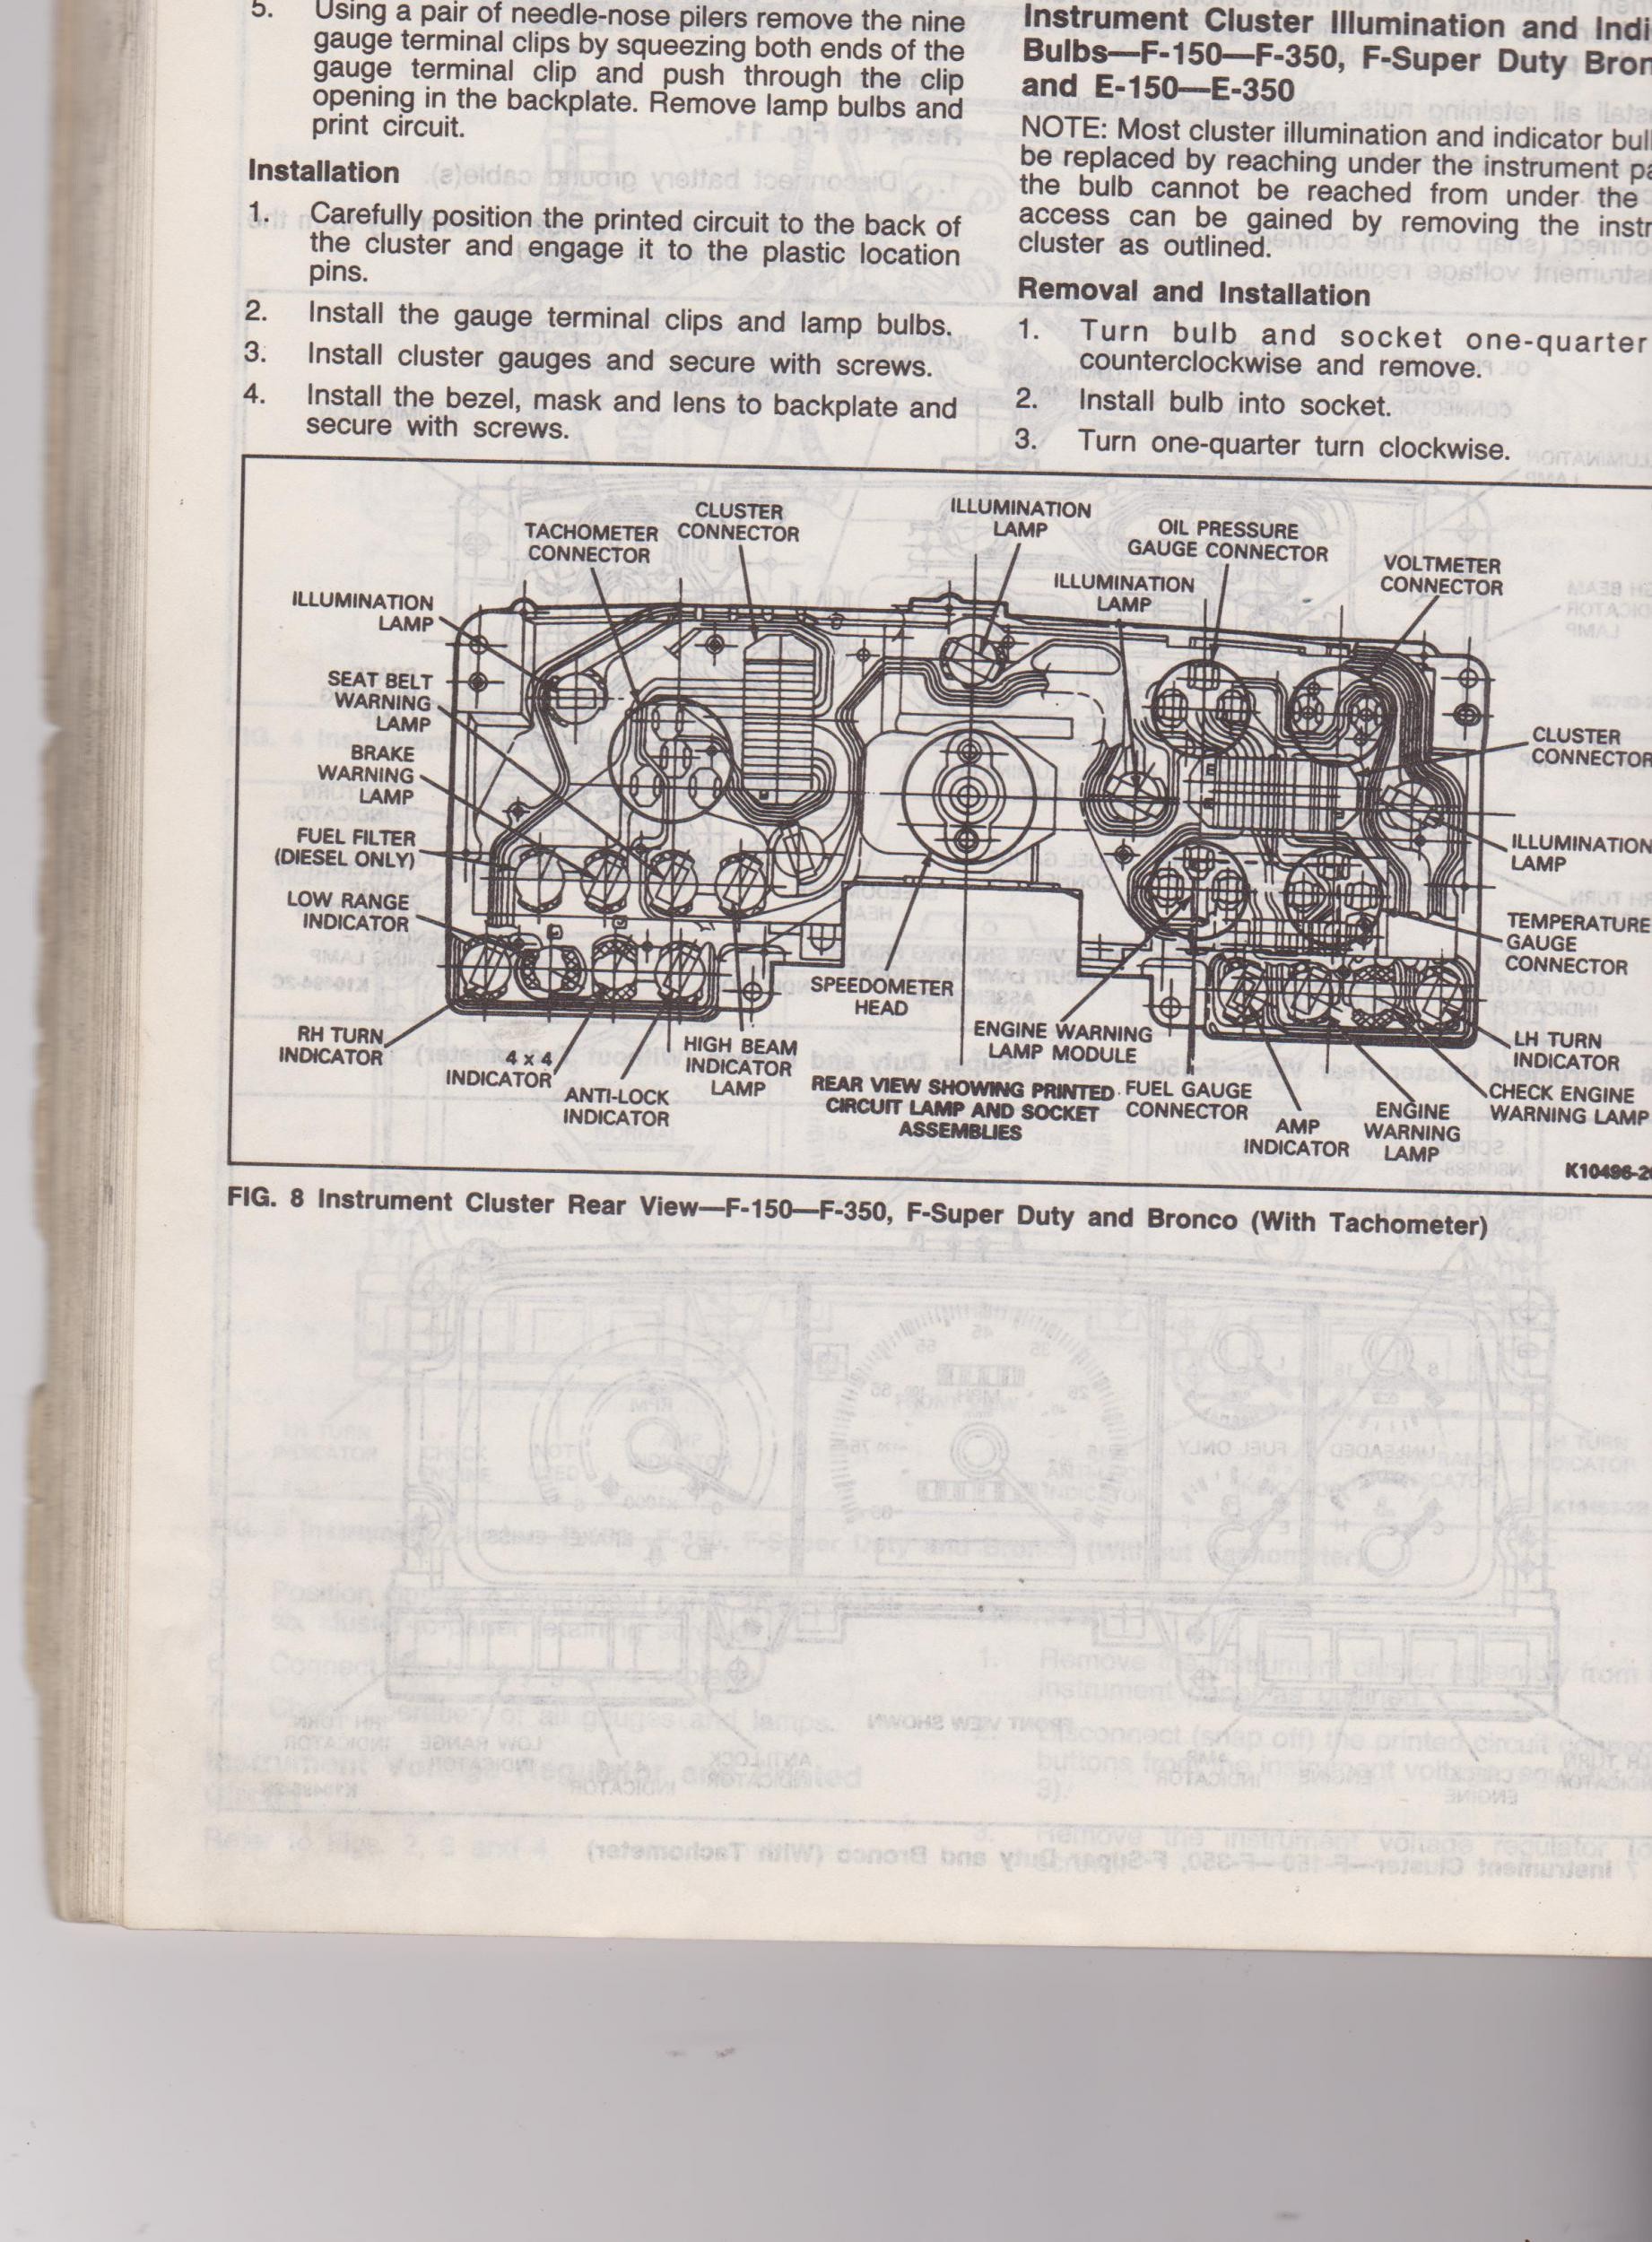 1989 ford 7.3 Idi Diesel Glow Plug Controller Diagram 89 F350 Coolant Temperature Sensor Page 2 Of 1989 ford 7.3 Idi Diesel Glow Plug Controller Diagram